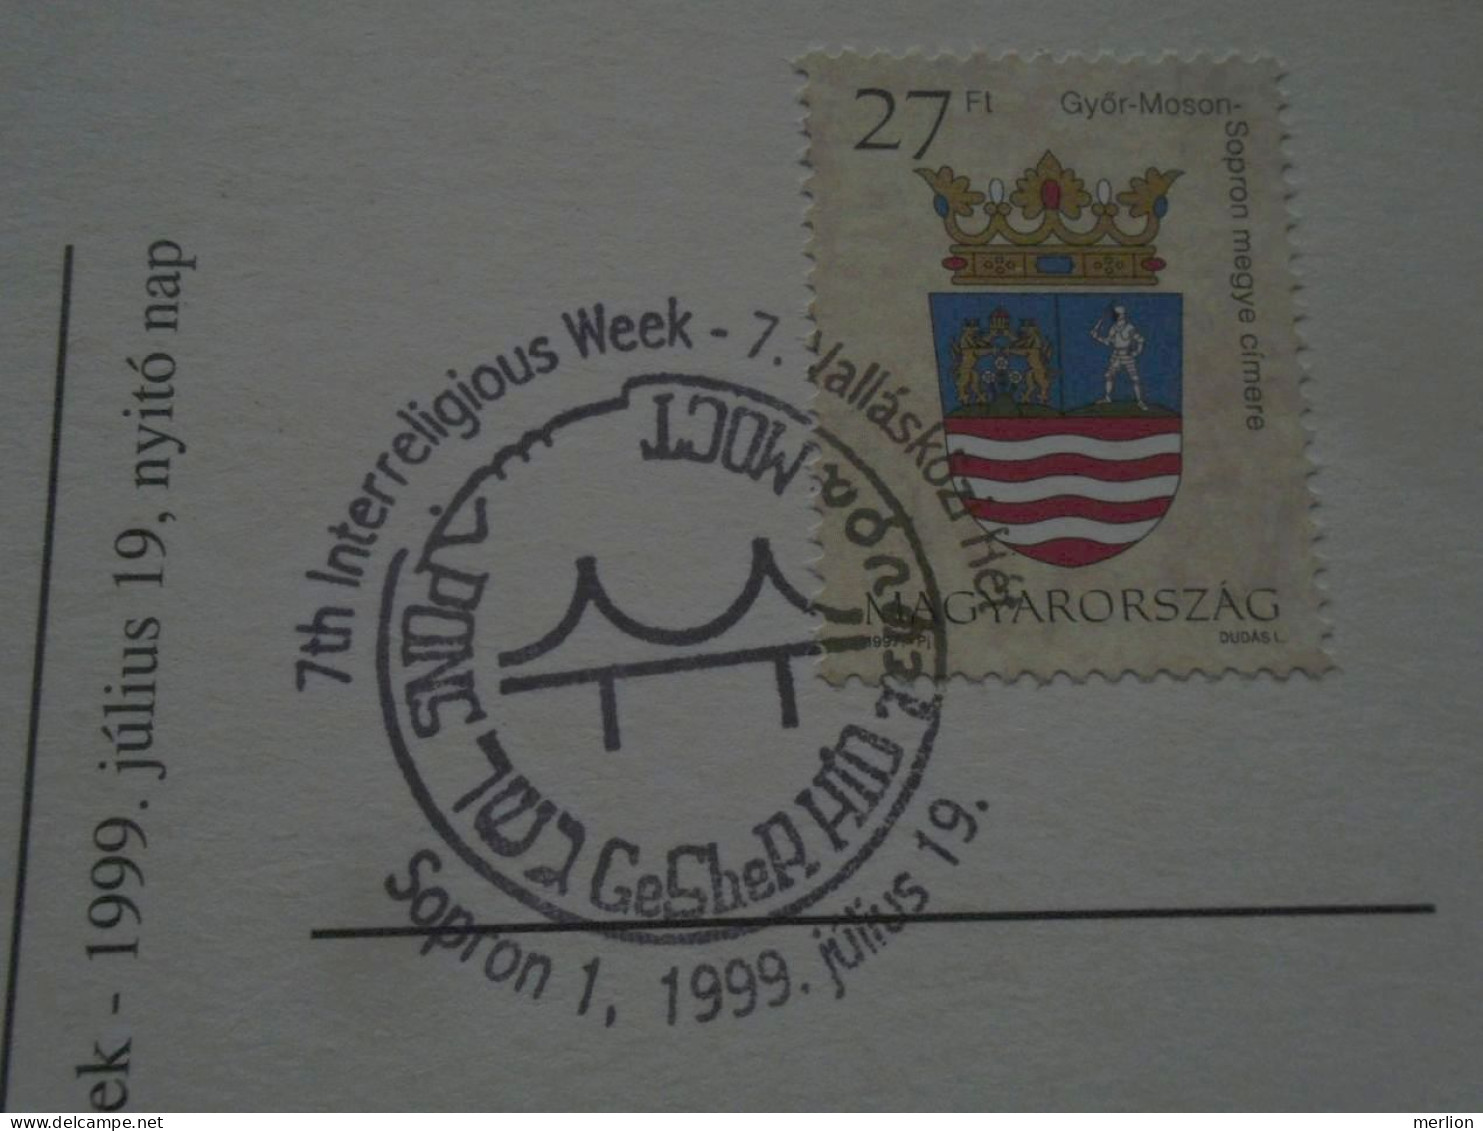 D201009  Hungary  Sopron  - Special Postmark - Interfaith Week Sopron - Jewish Day 1999 Gesher Híd - Judaisme